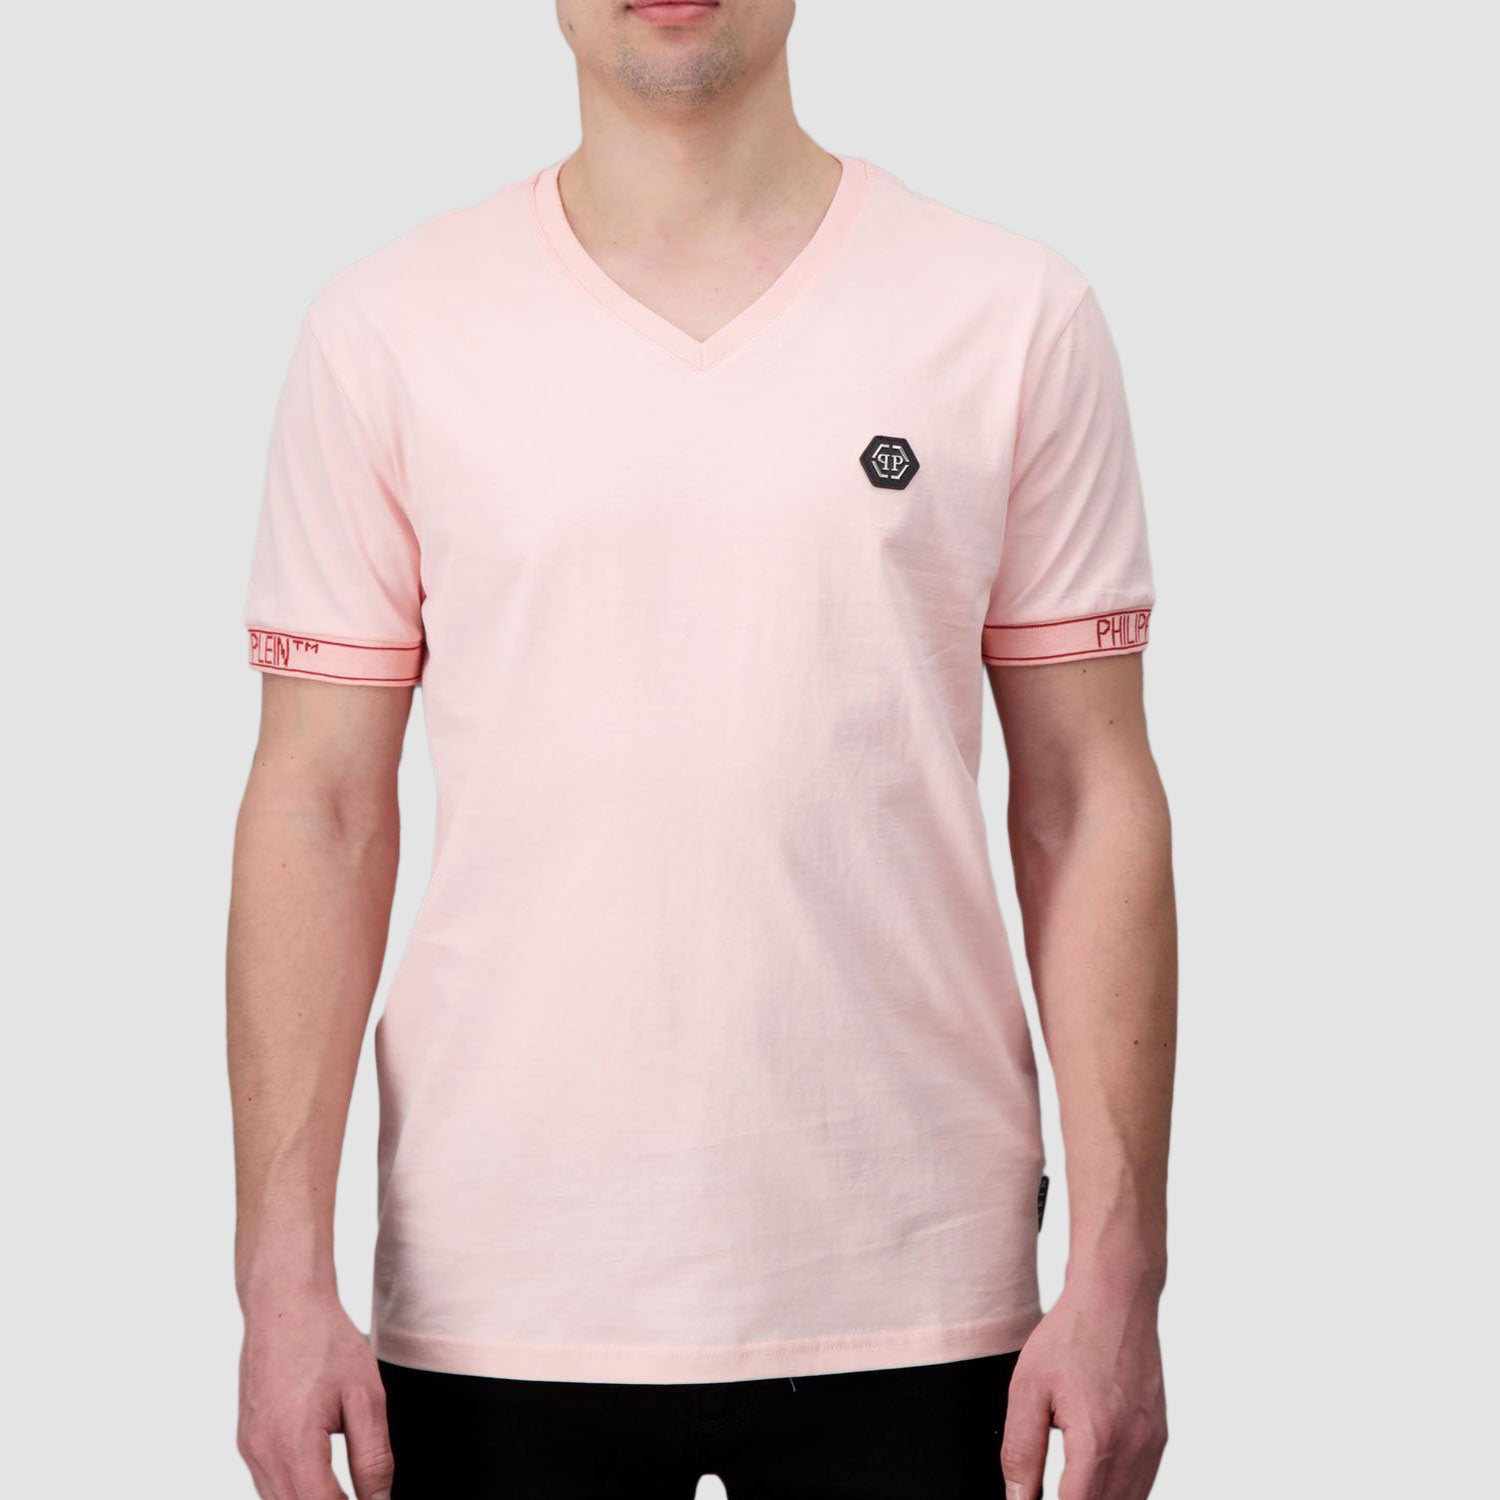 Philipp Plein Rose/Pink V-Neck SS T-Shirt